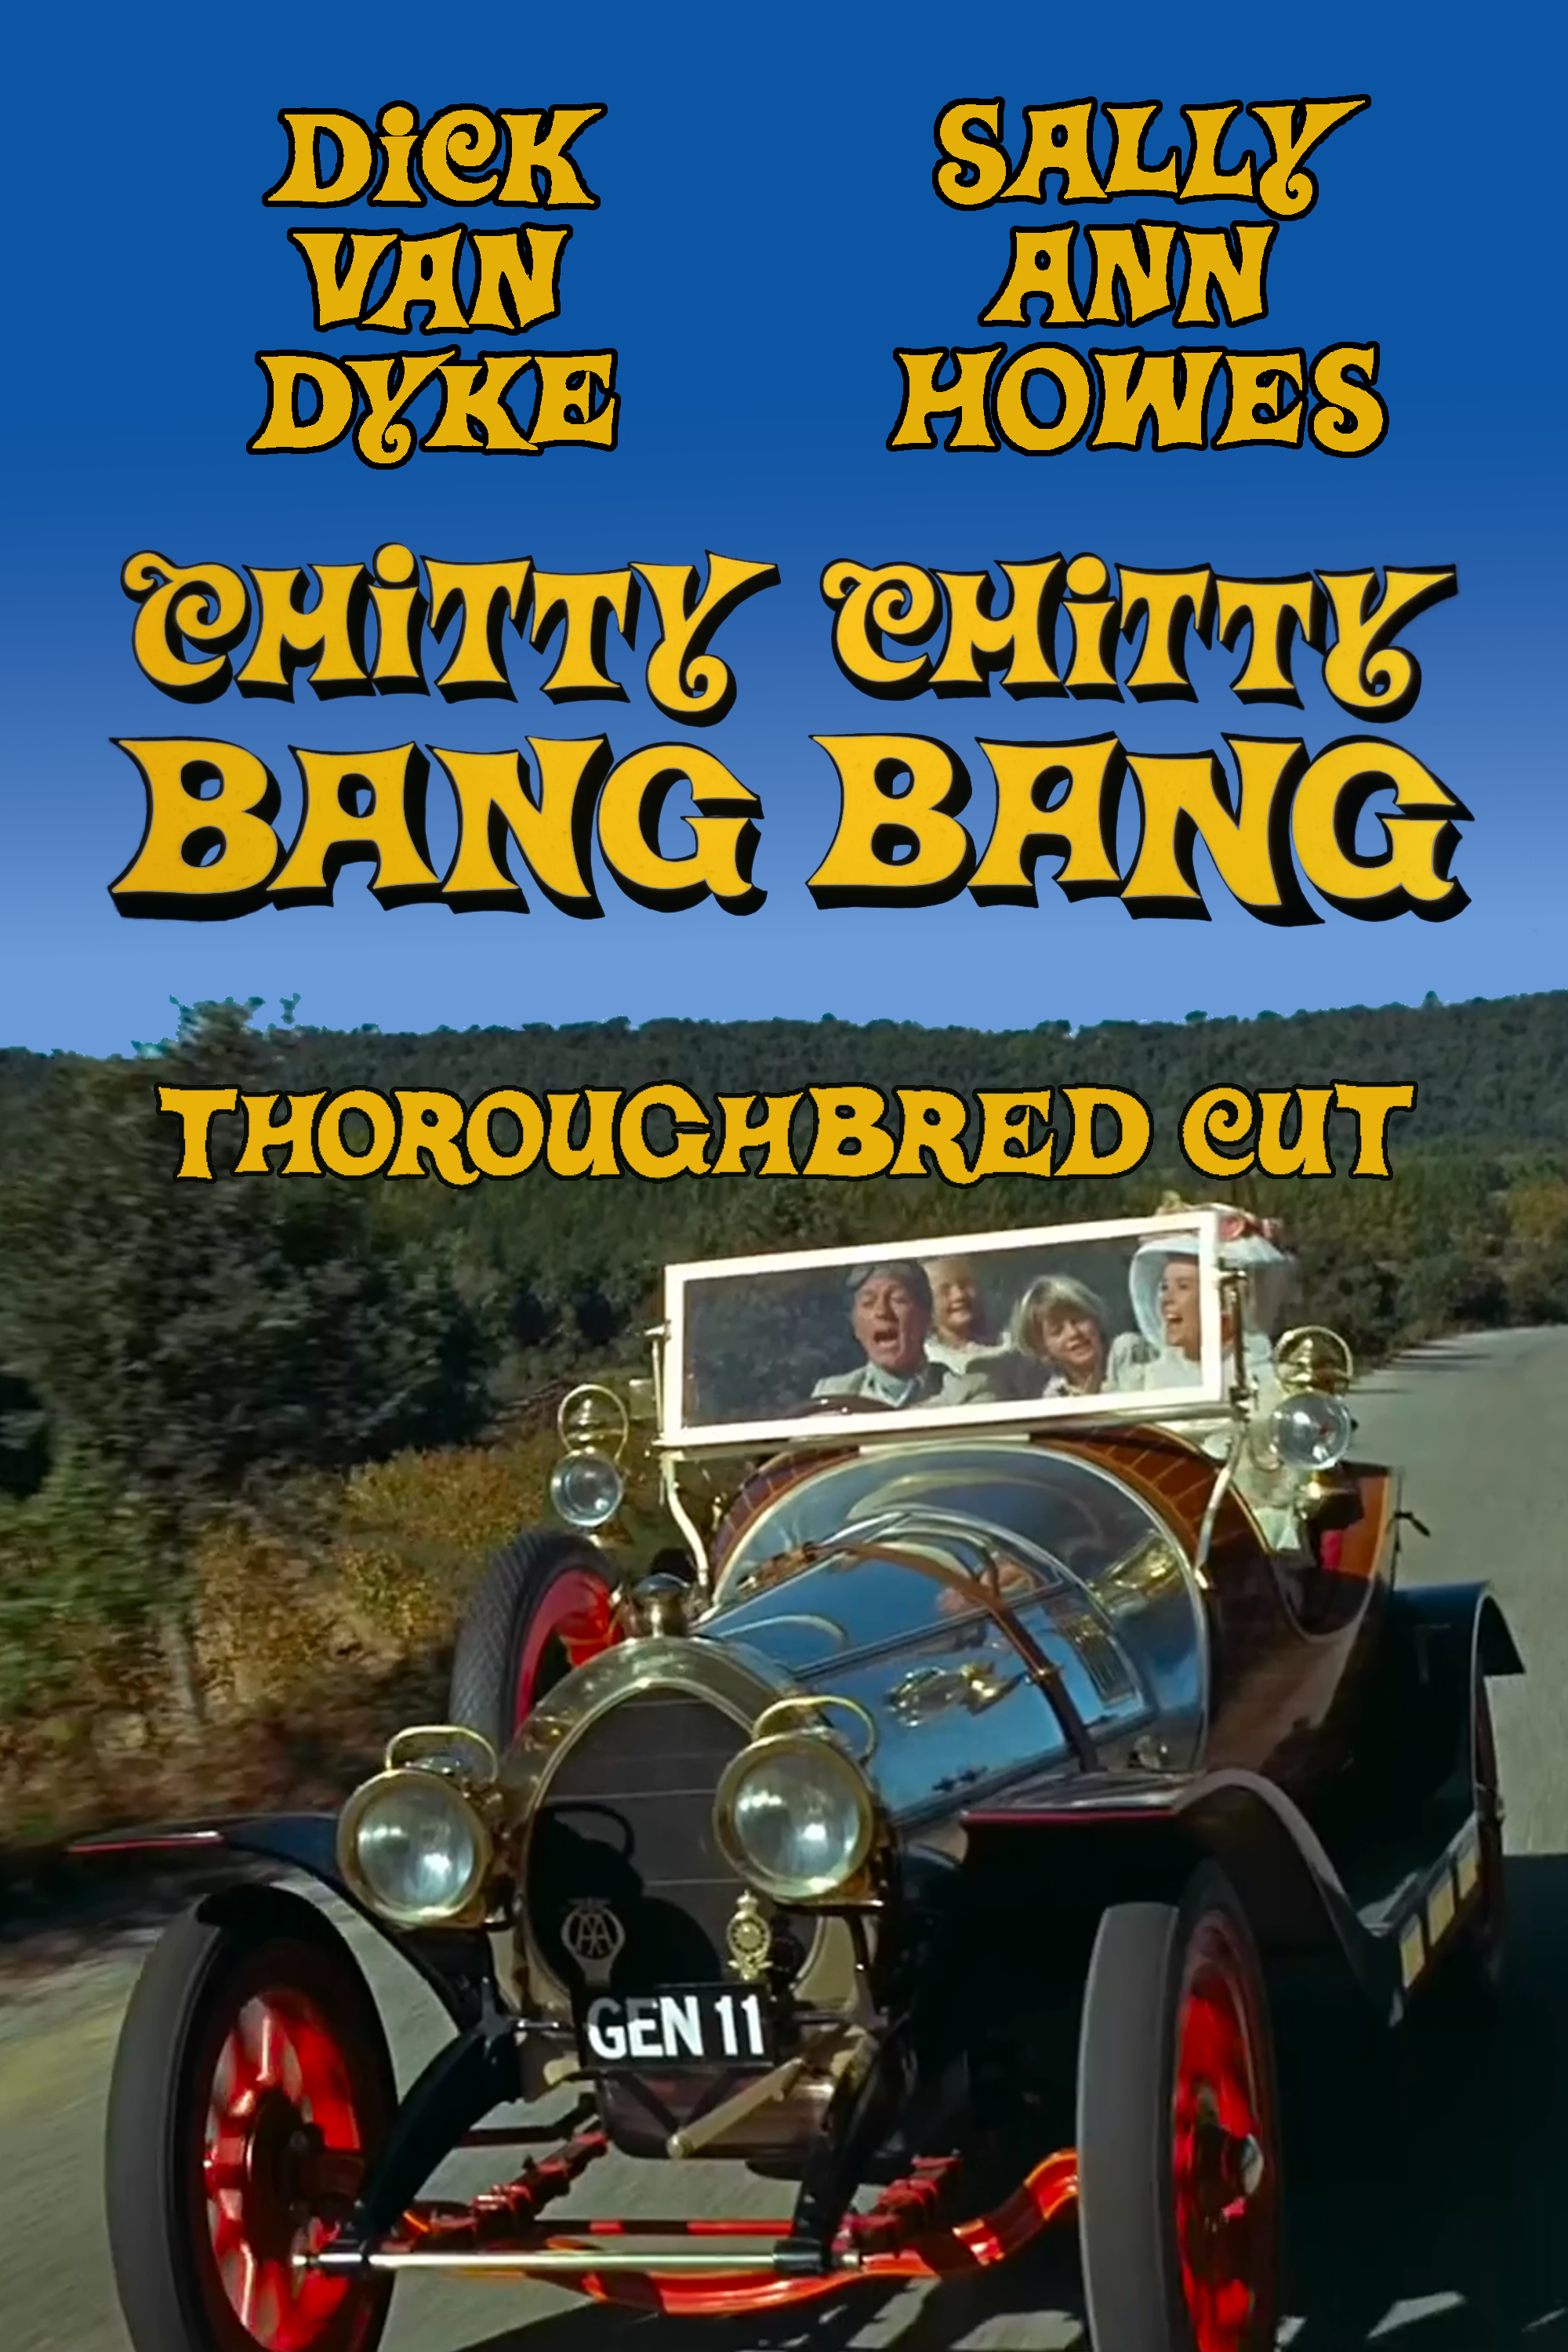 Chitty Chitty Bang Bang - Thoroughbred Cut.png